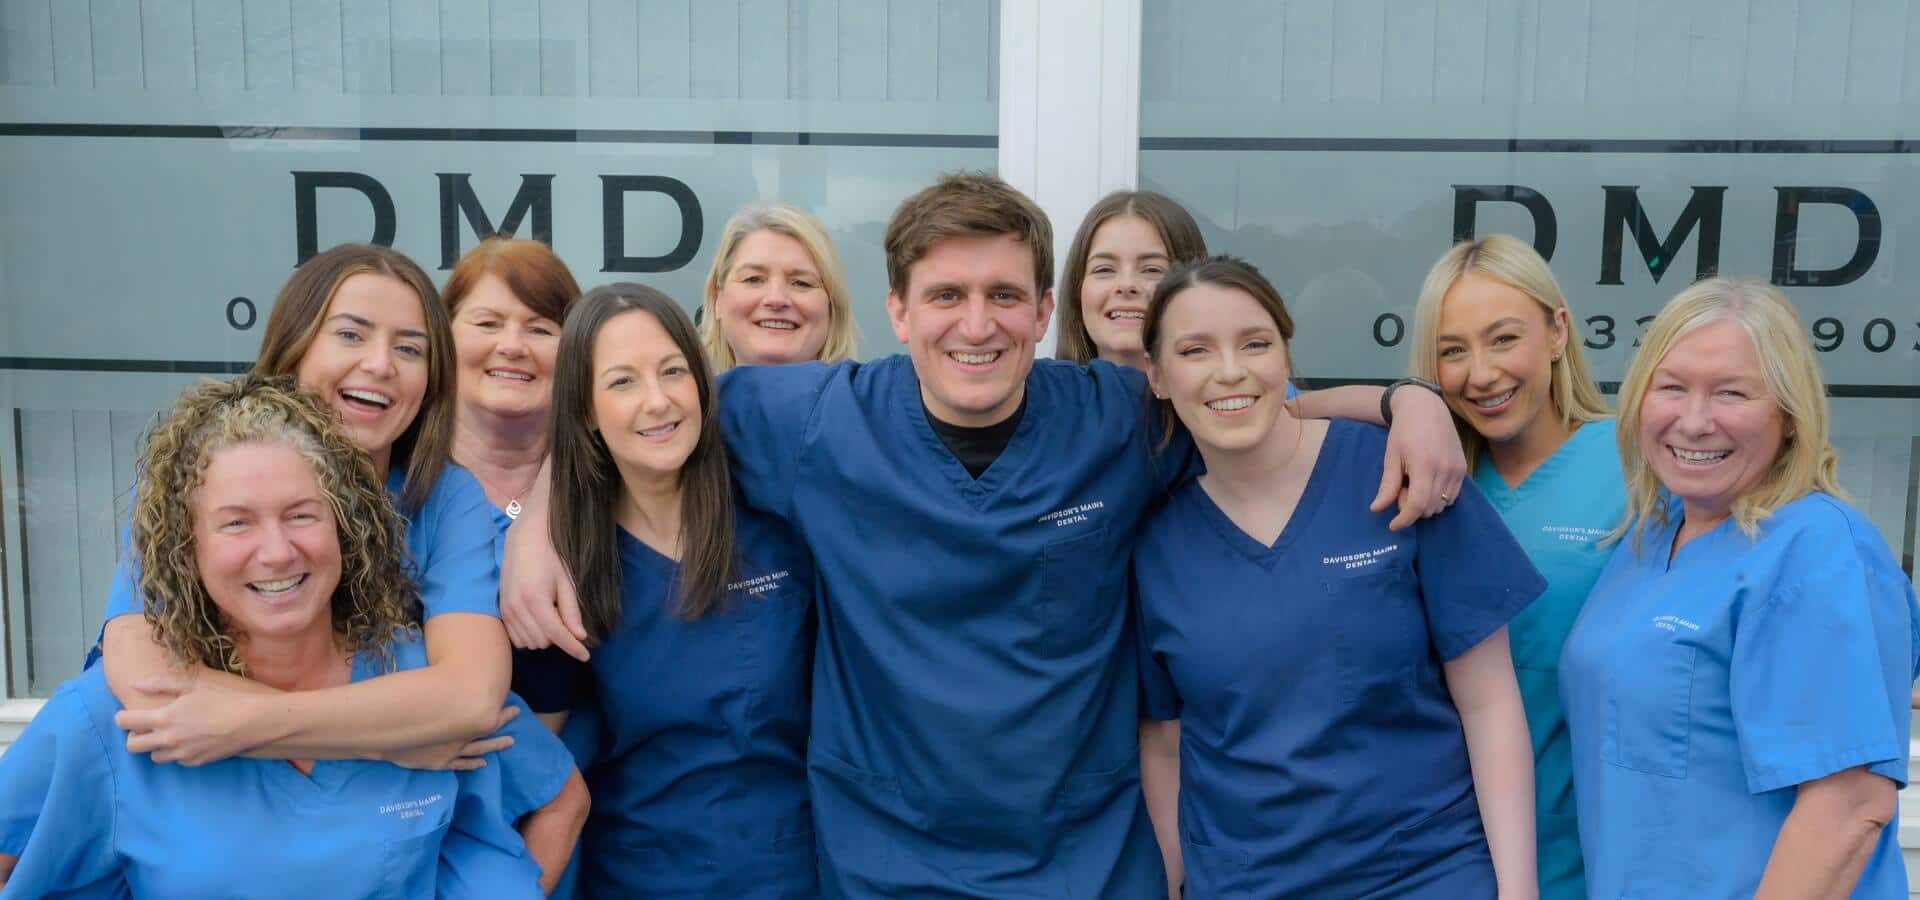 Davidson’s Mains Dental team picture